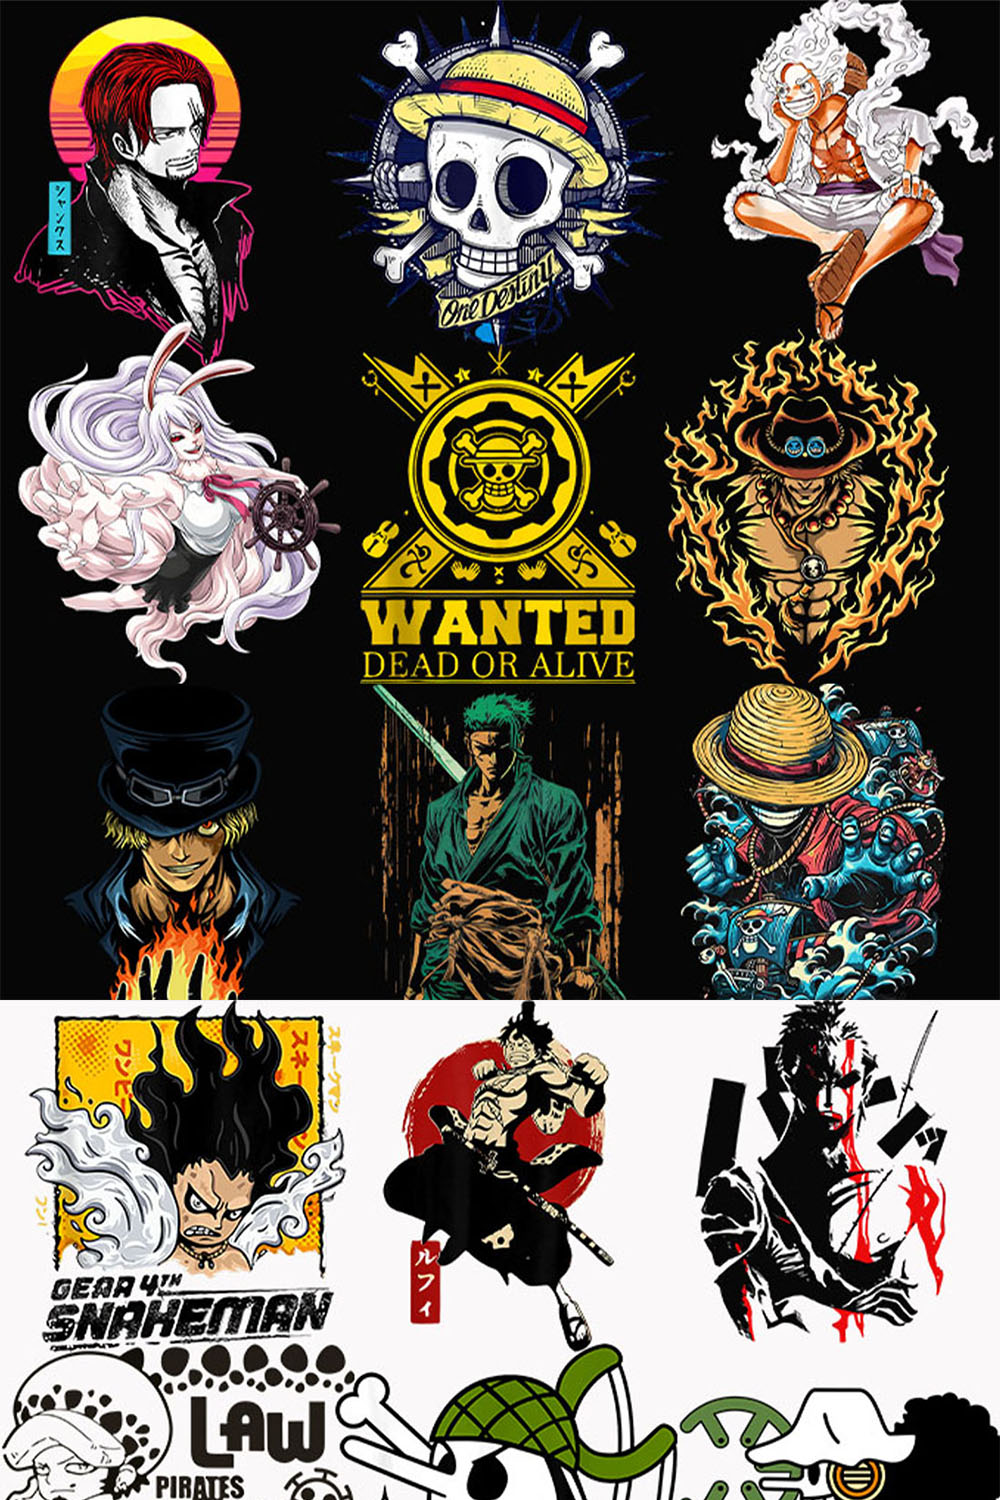 Pirate  Anime chibi, Chibi characters, Character design